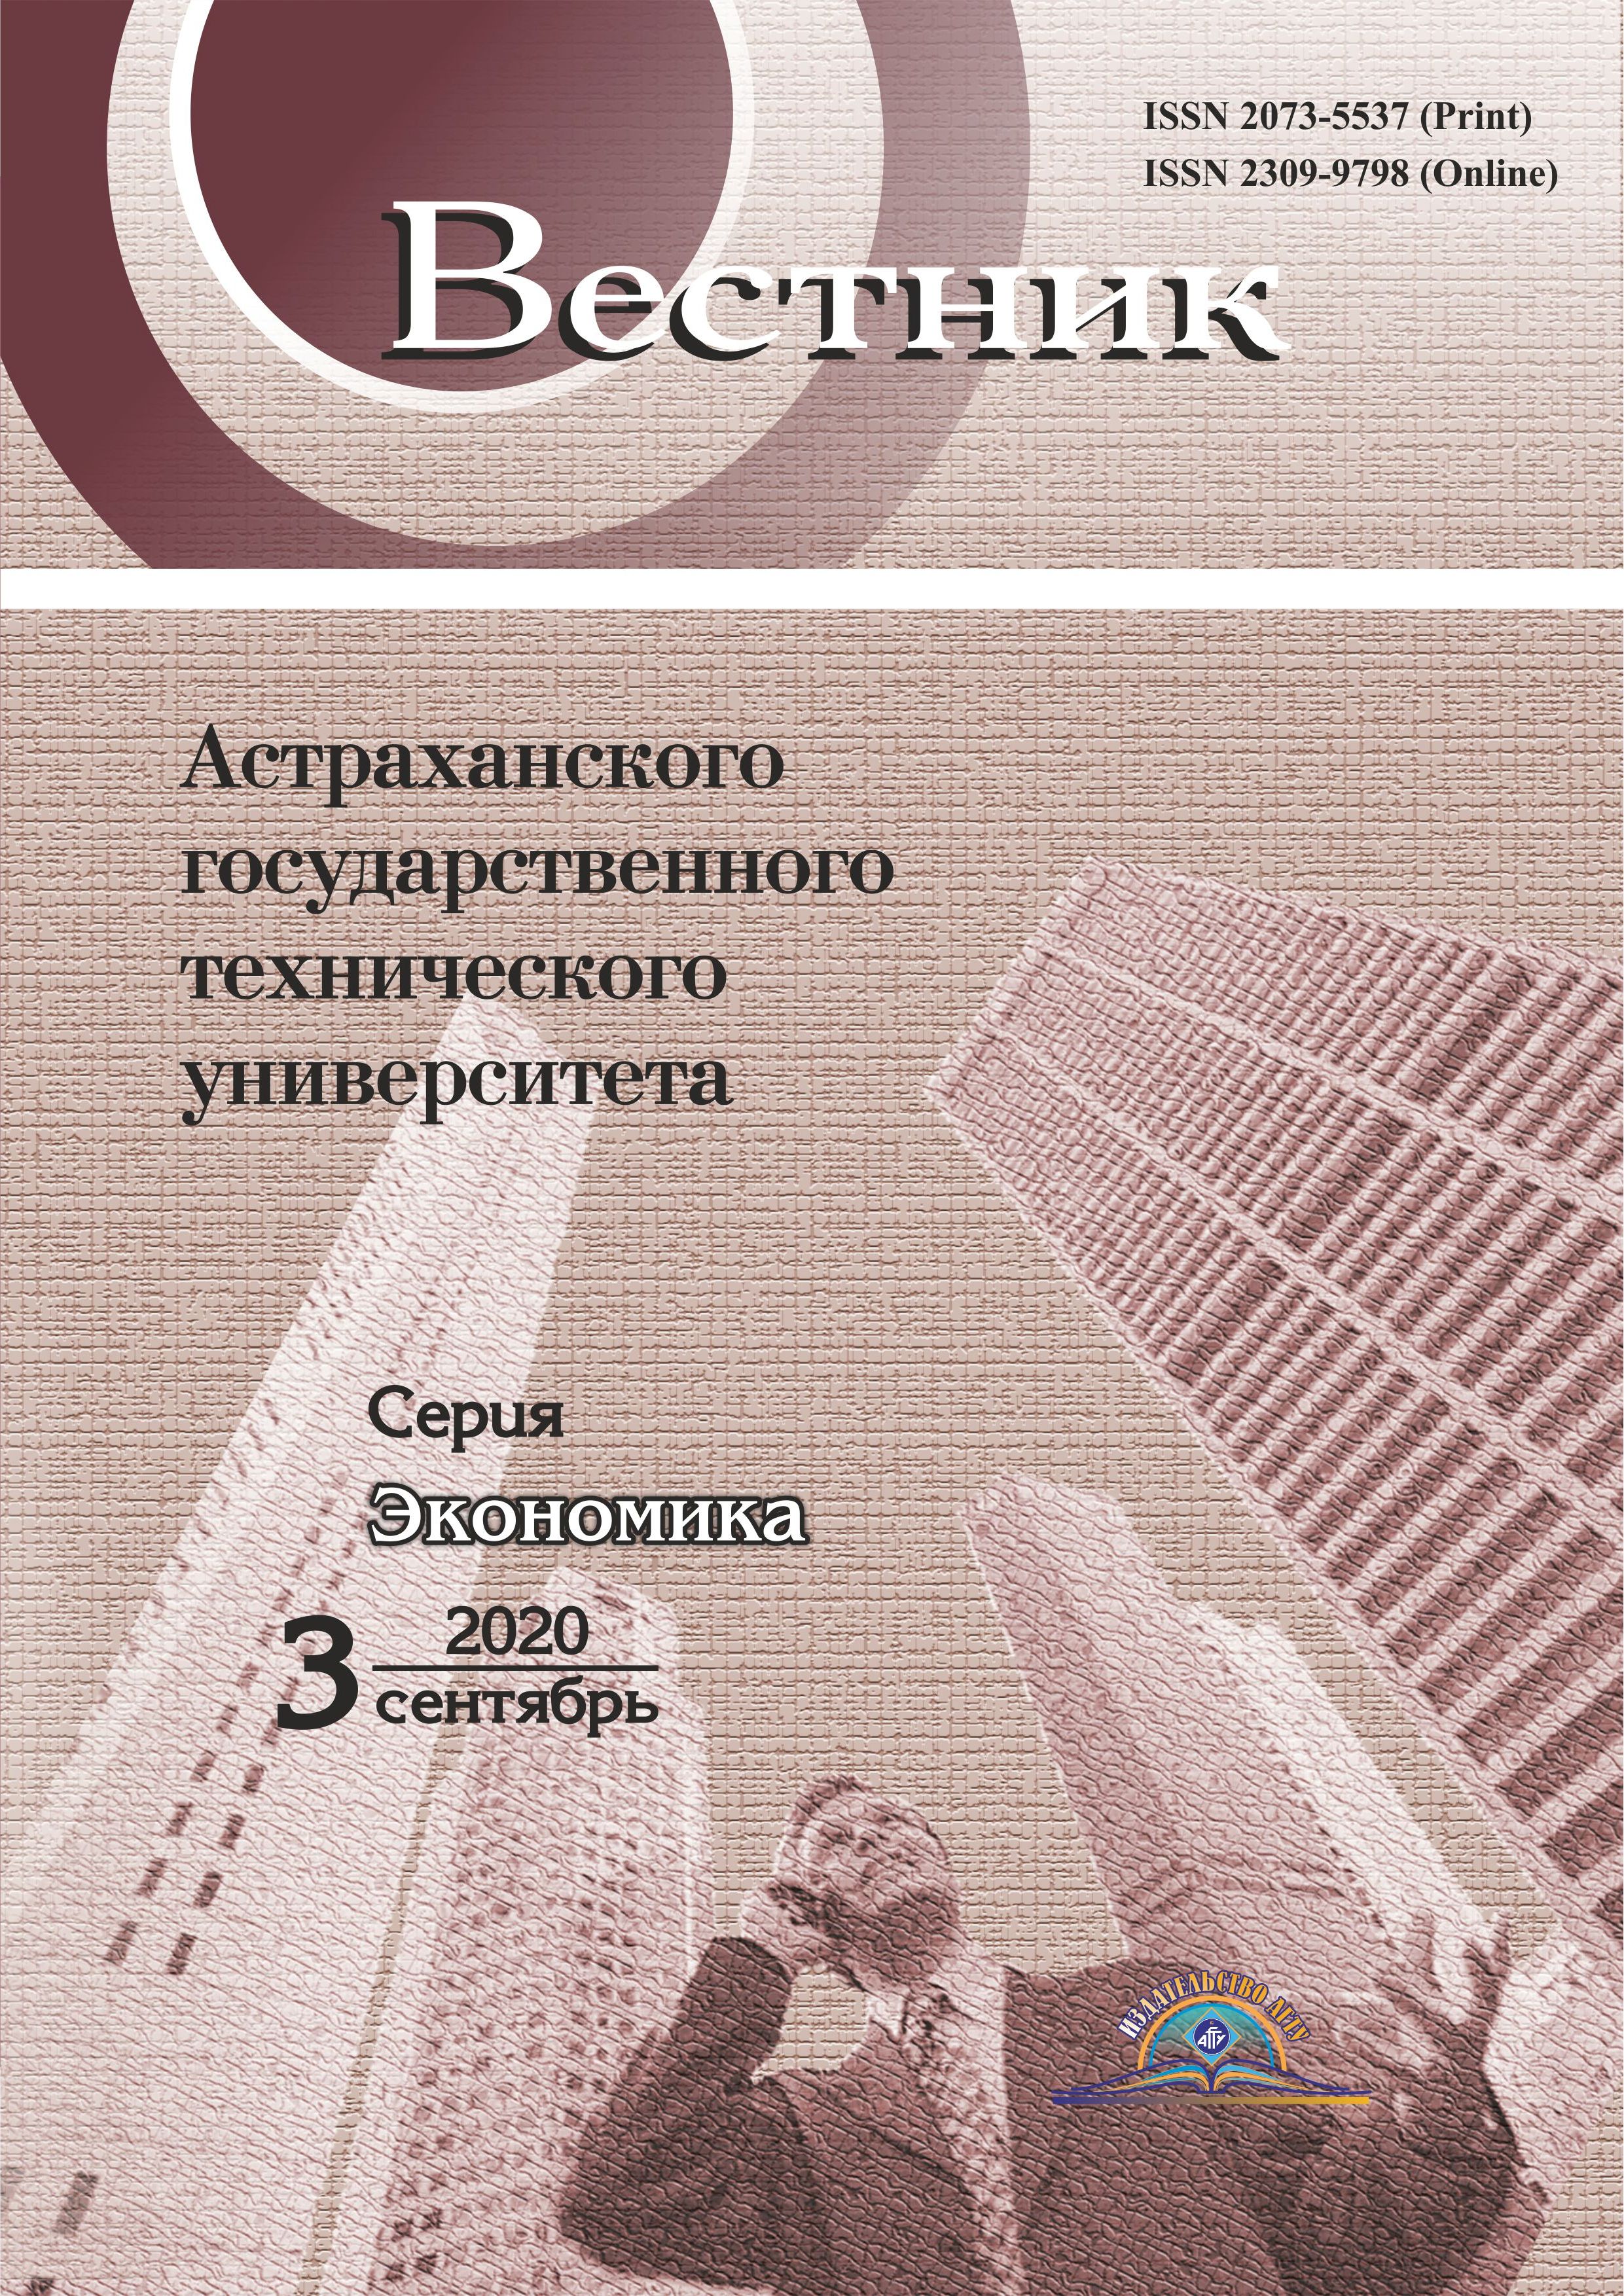                         Influence of economic development of municipal district on preschool education (case study of Republic of Bashkortostan)
            